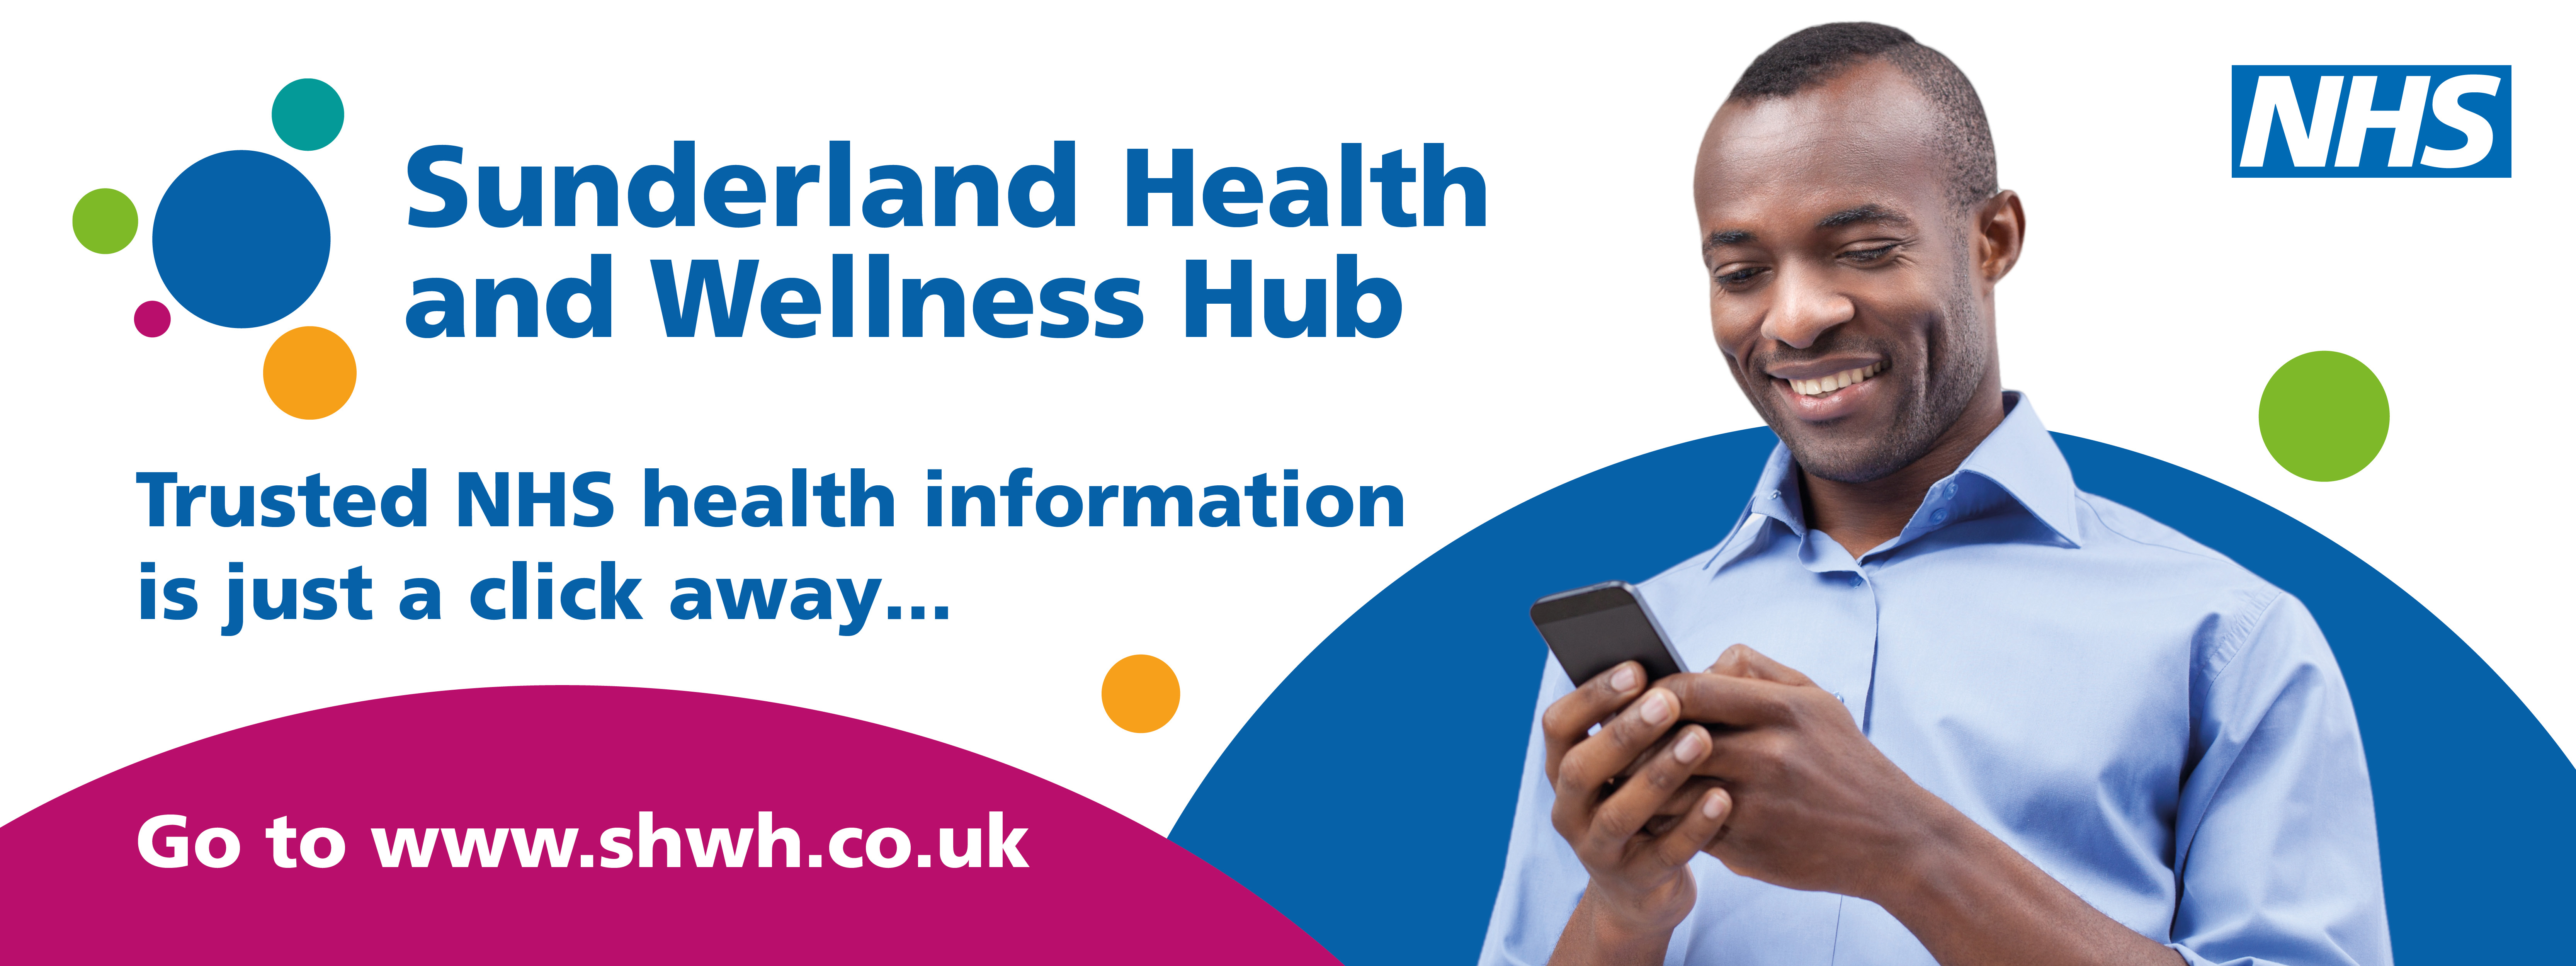 Sunderland Health and Wellbeing Hub Web.jpg